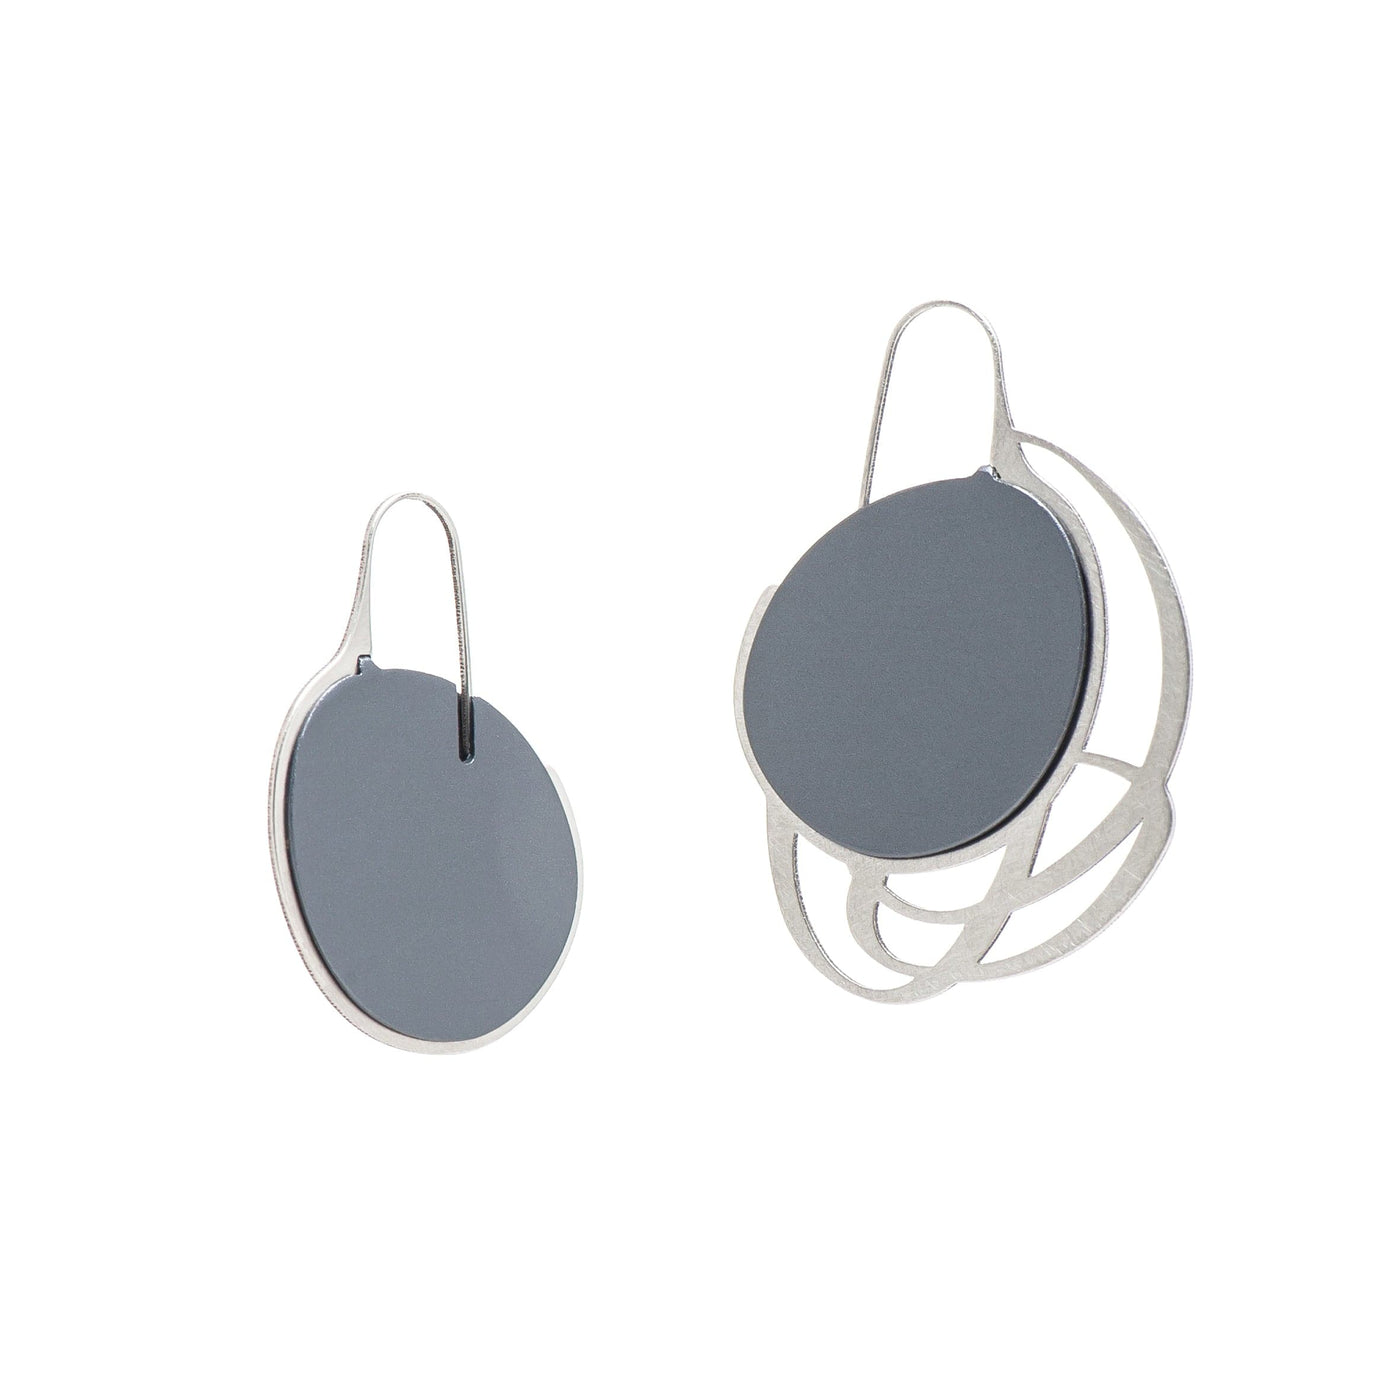 Pebble Earrings Small Mix - Mauve - inSync design